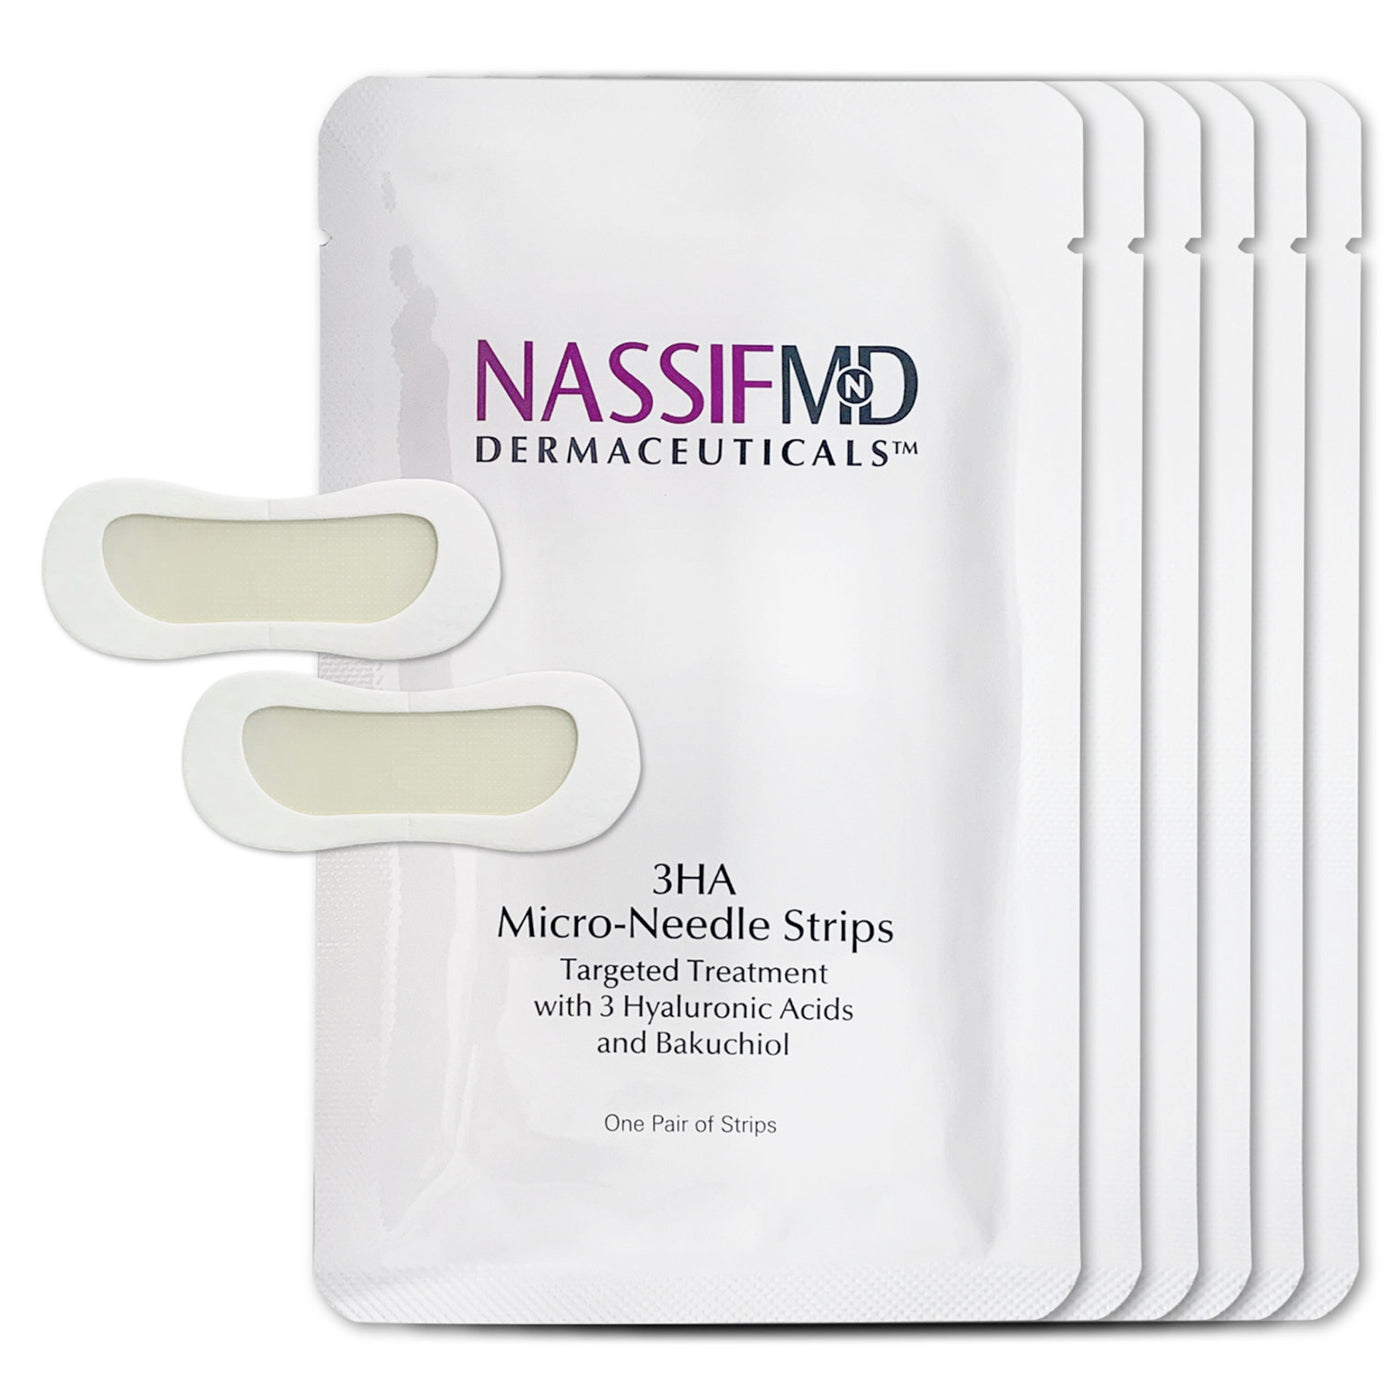 DR. NASSIF – 3HA MICRO-NEEDLE STRIPS